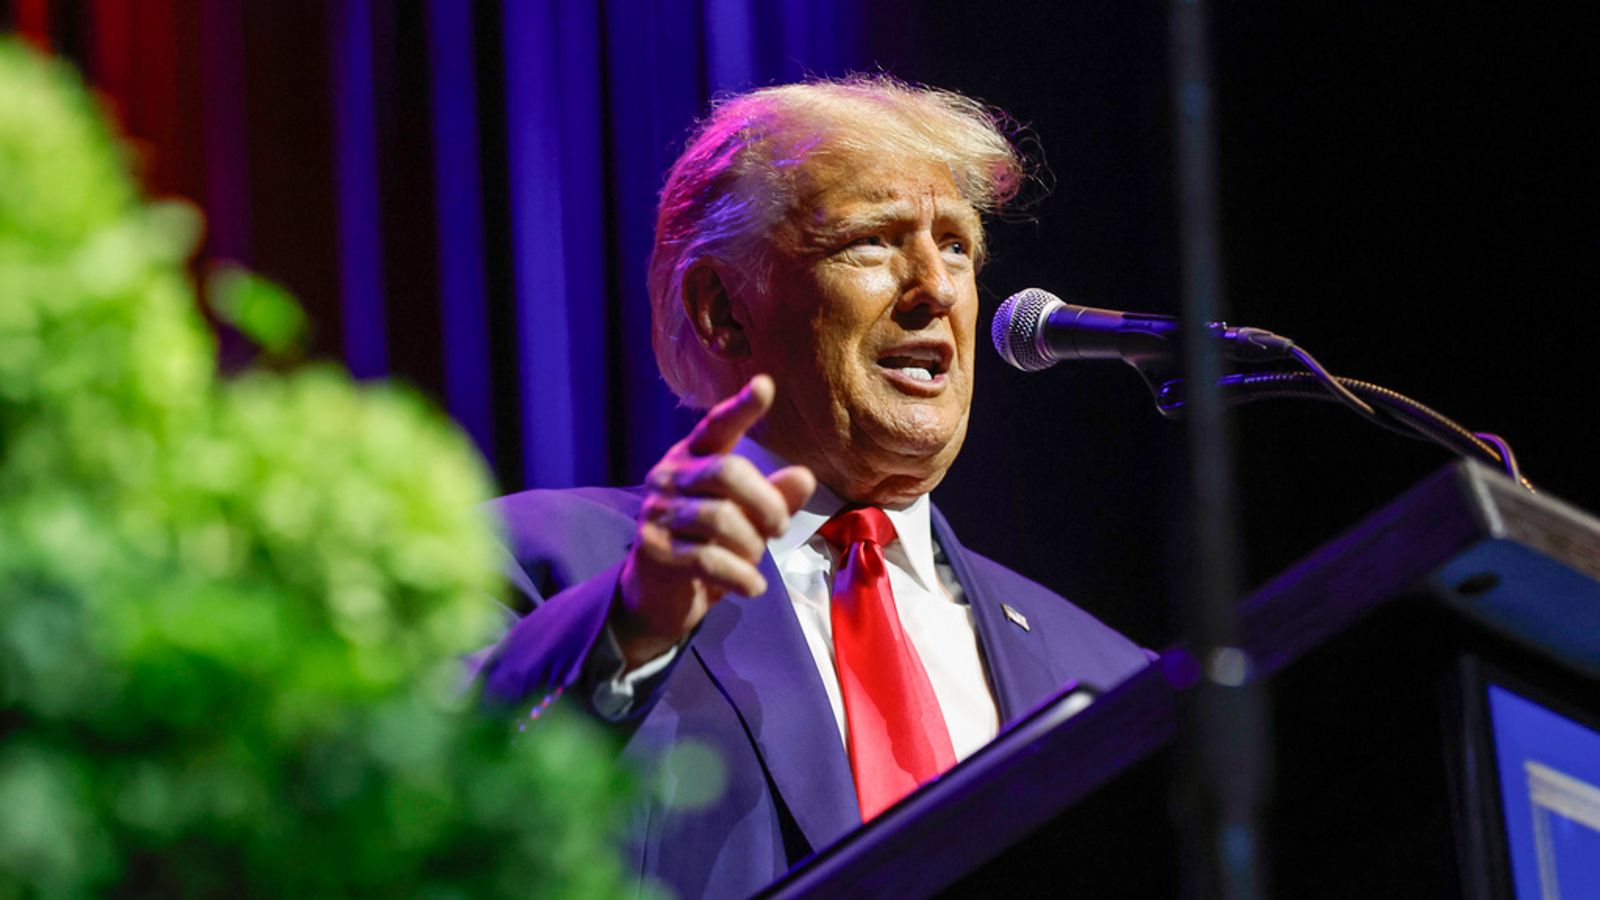 Donald Trump defends 'harmful' social media post as 'political speech'